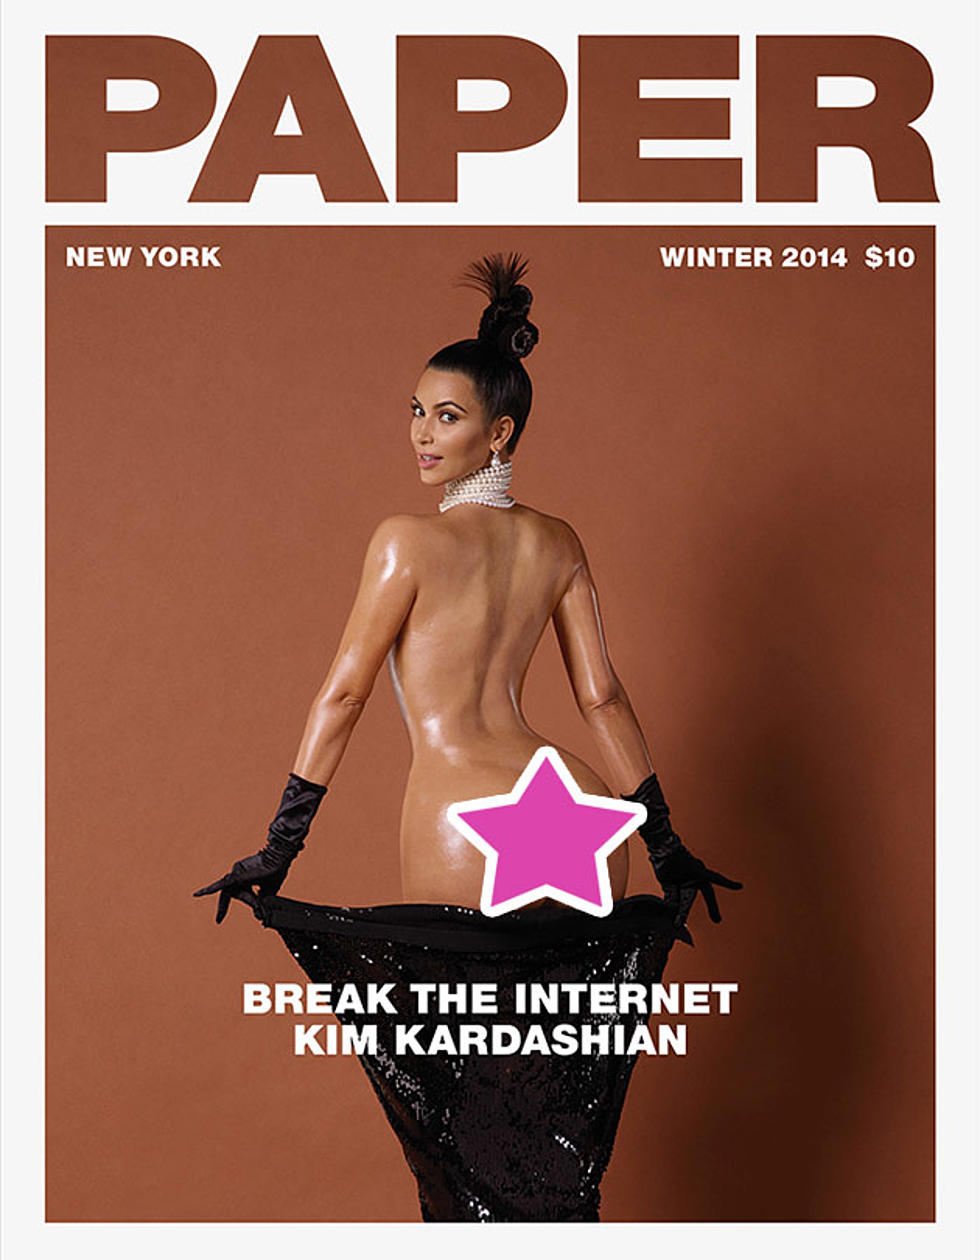 Is Kim Kardashian Hot or Not?